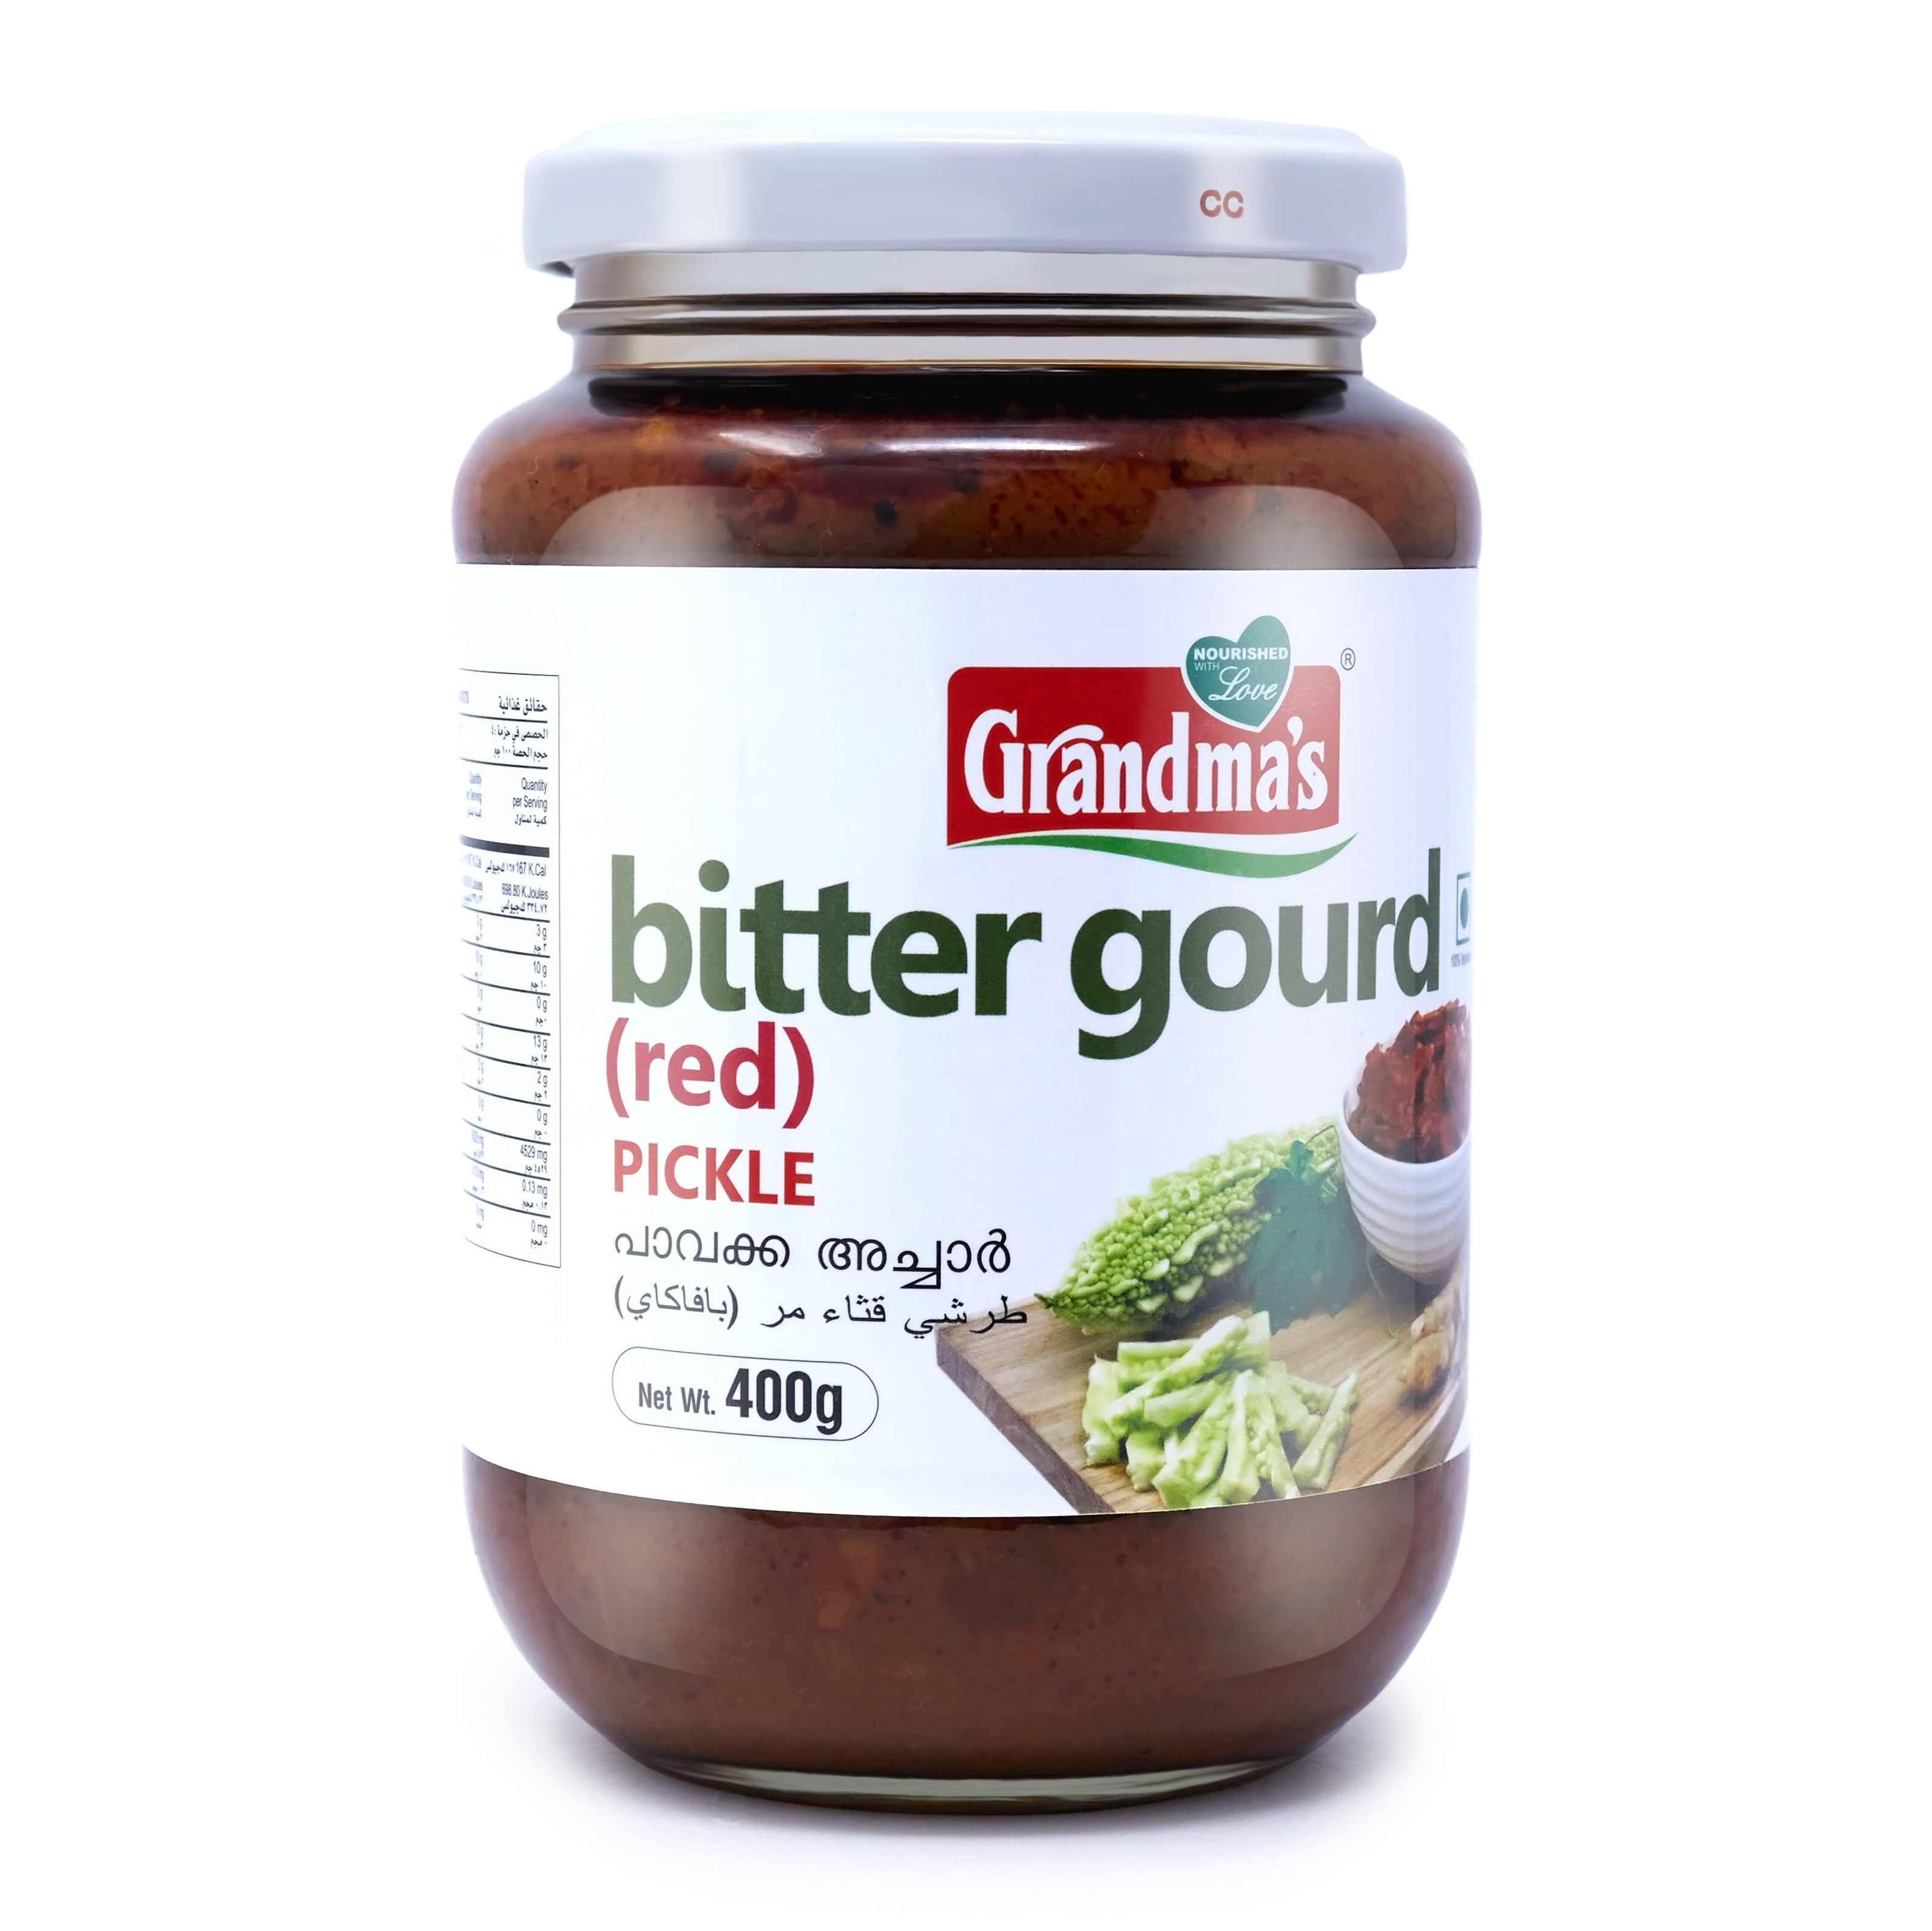 Bitter gourd pickle